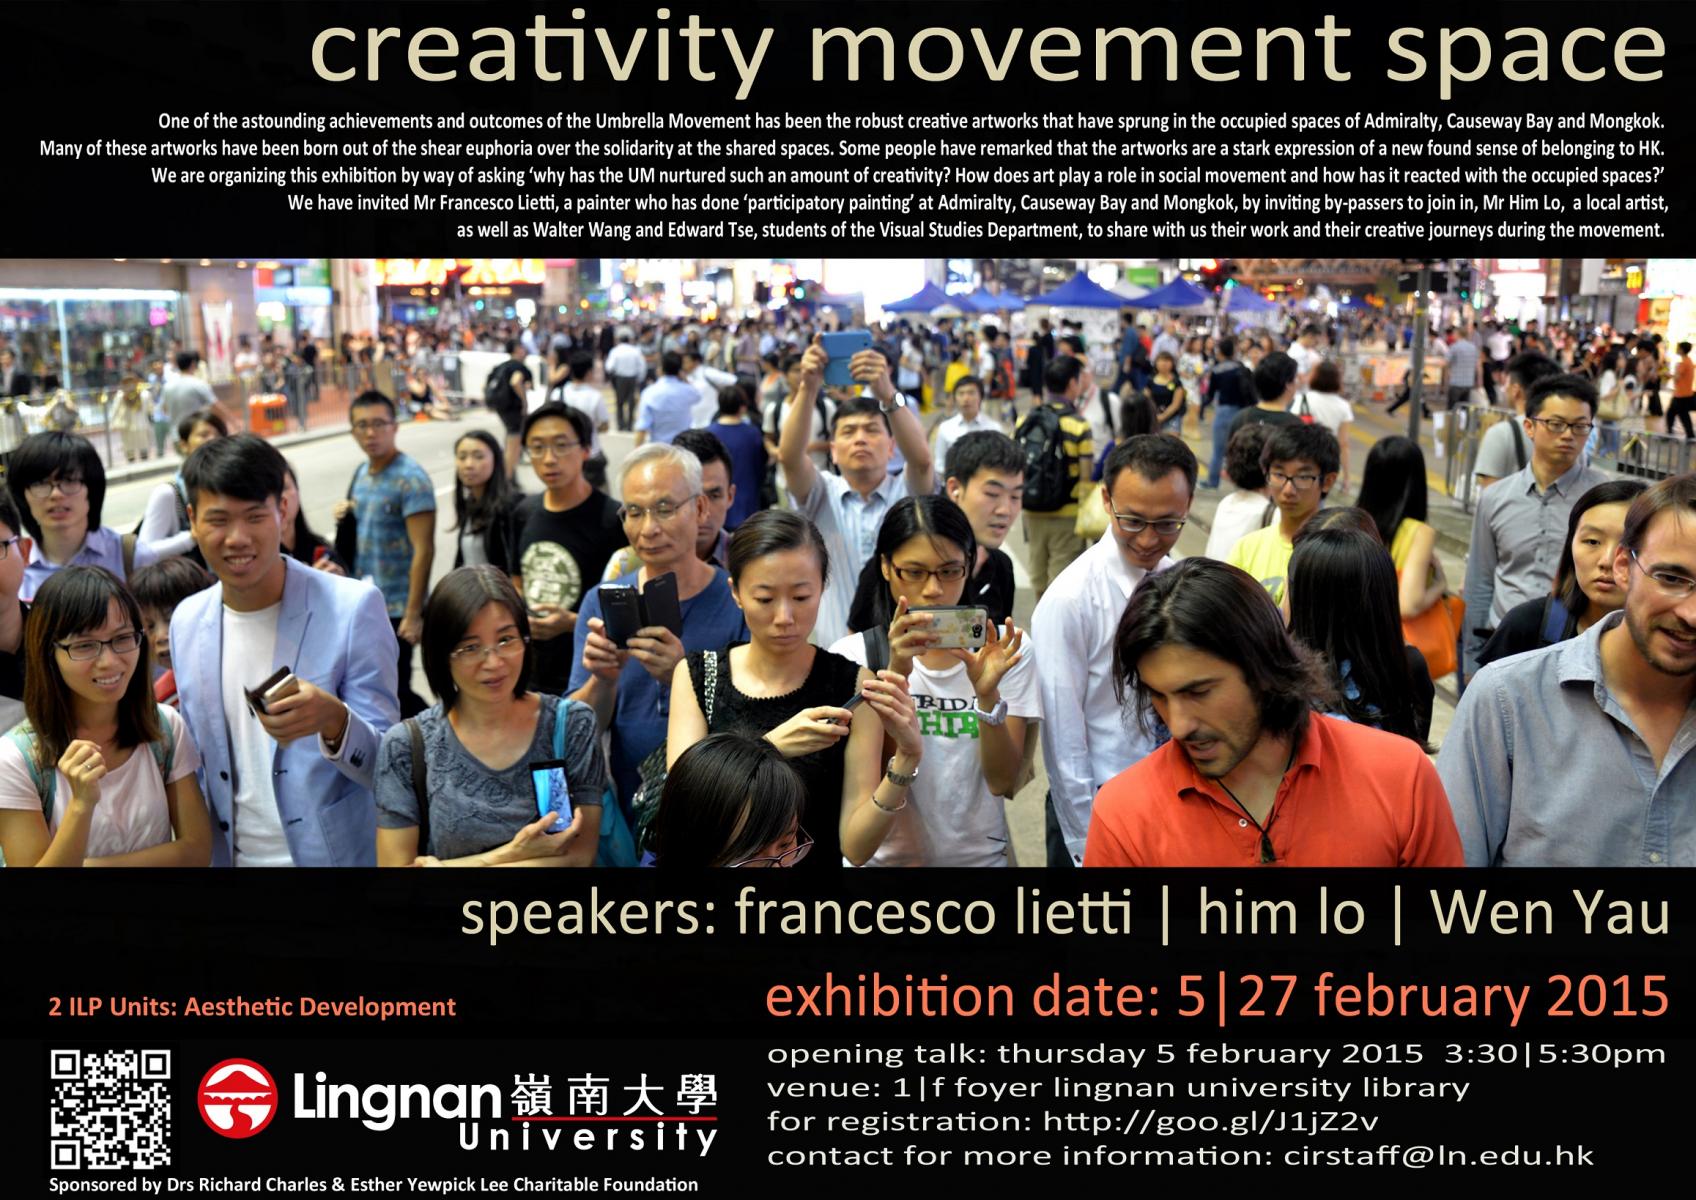 "Creativity movement space" exhibition